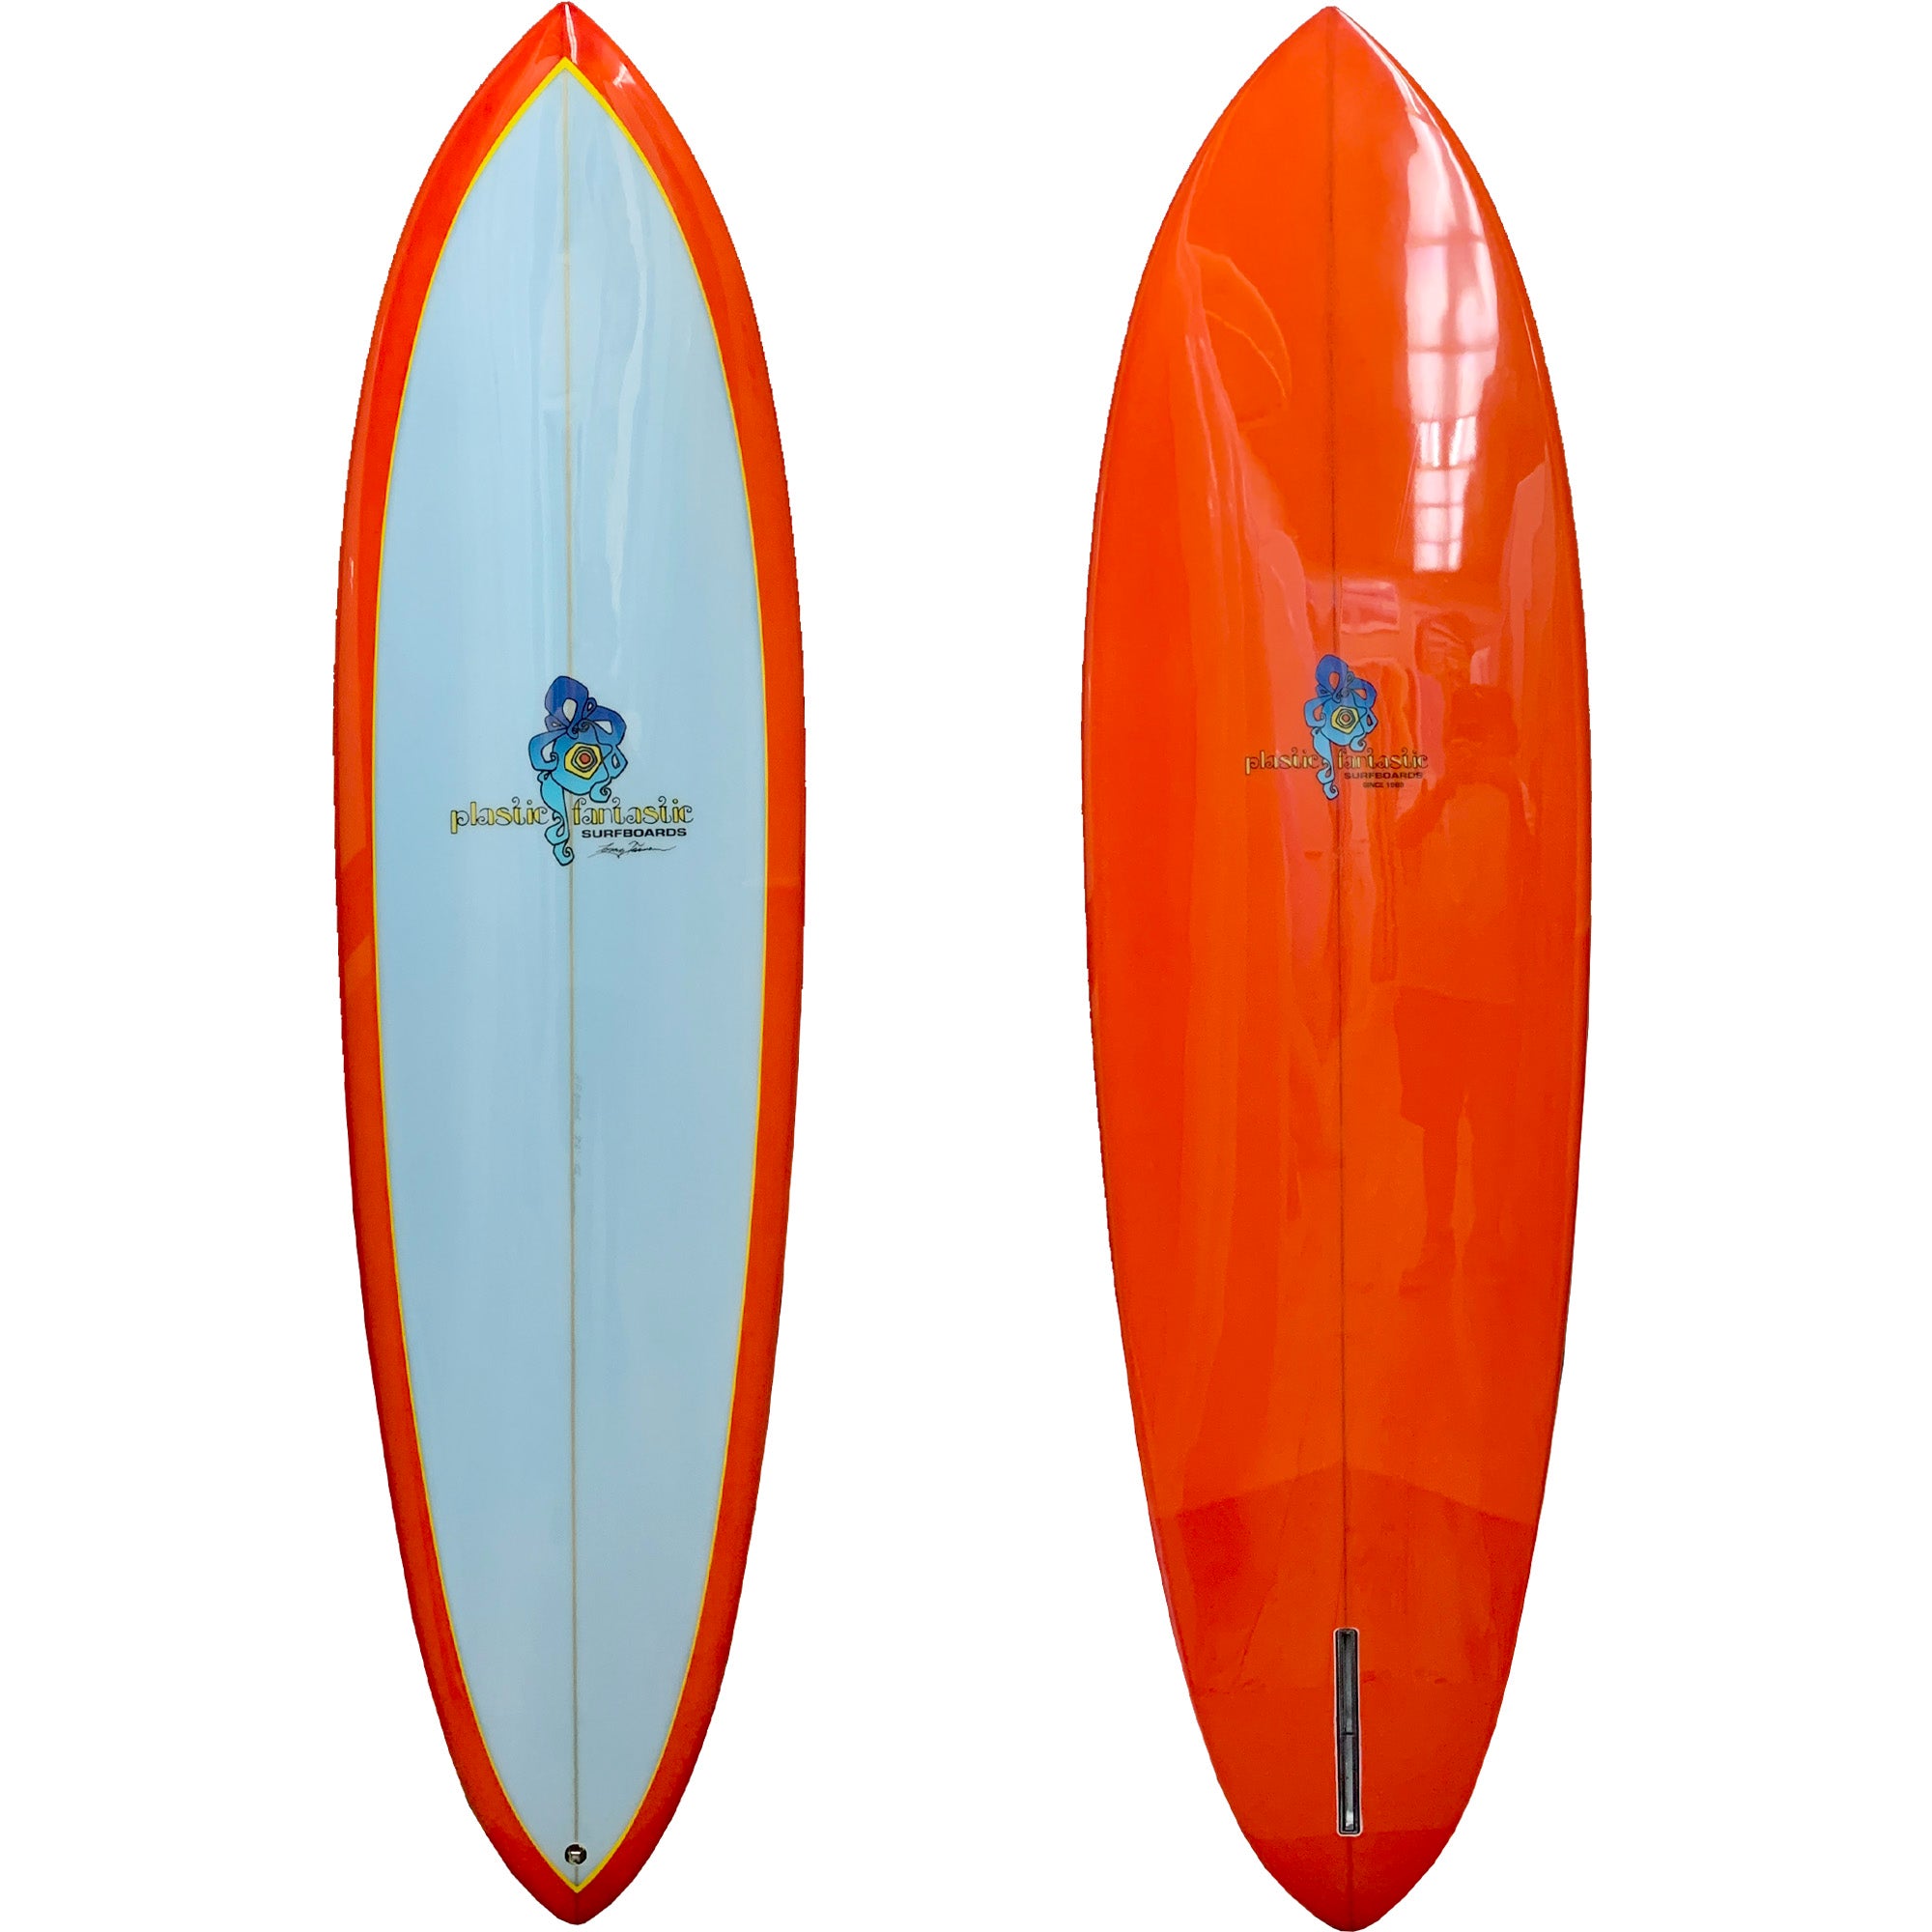 Plastic Fantastic Single Fin 7'2 Surfboard